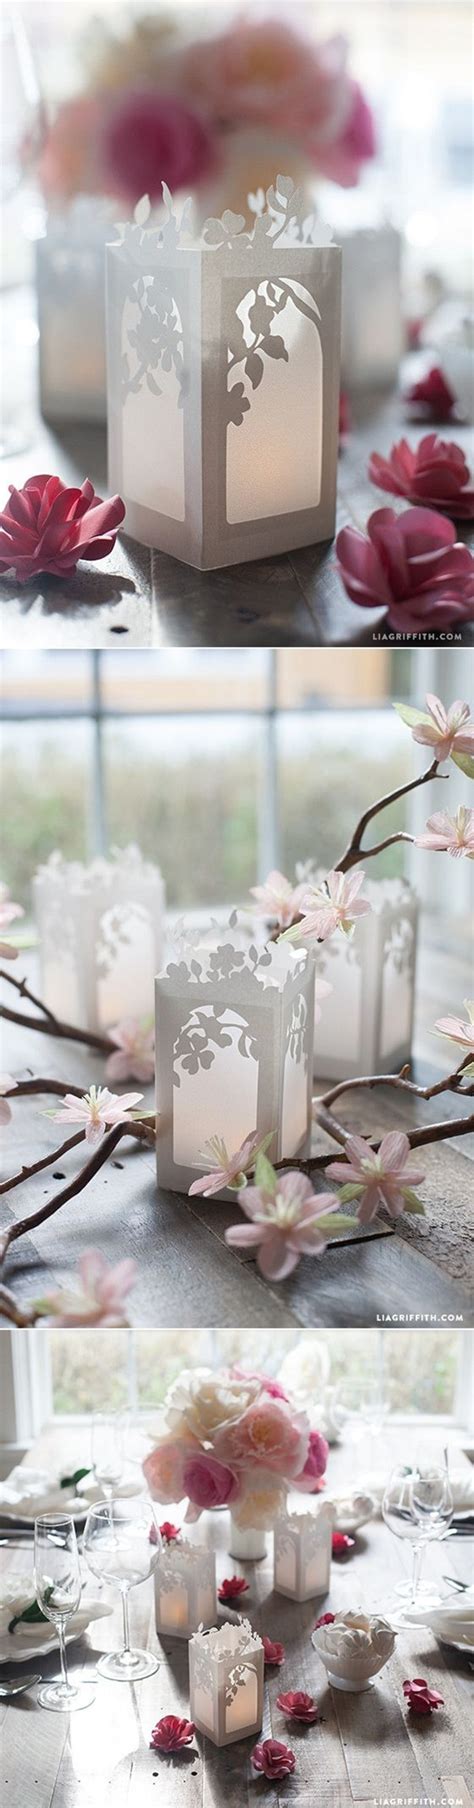 20 Creative Diy Wedding Ideas For 2016 Spring Elegantweddinginvites